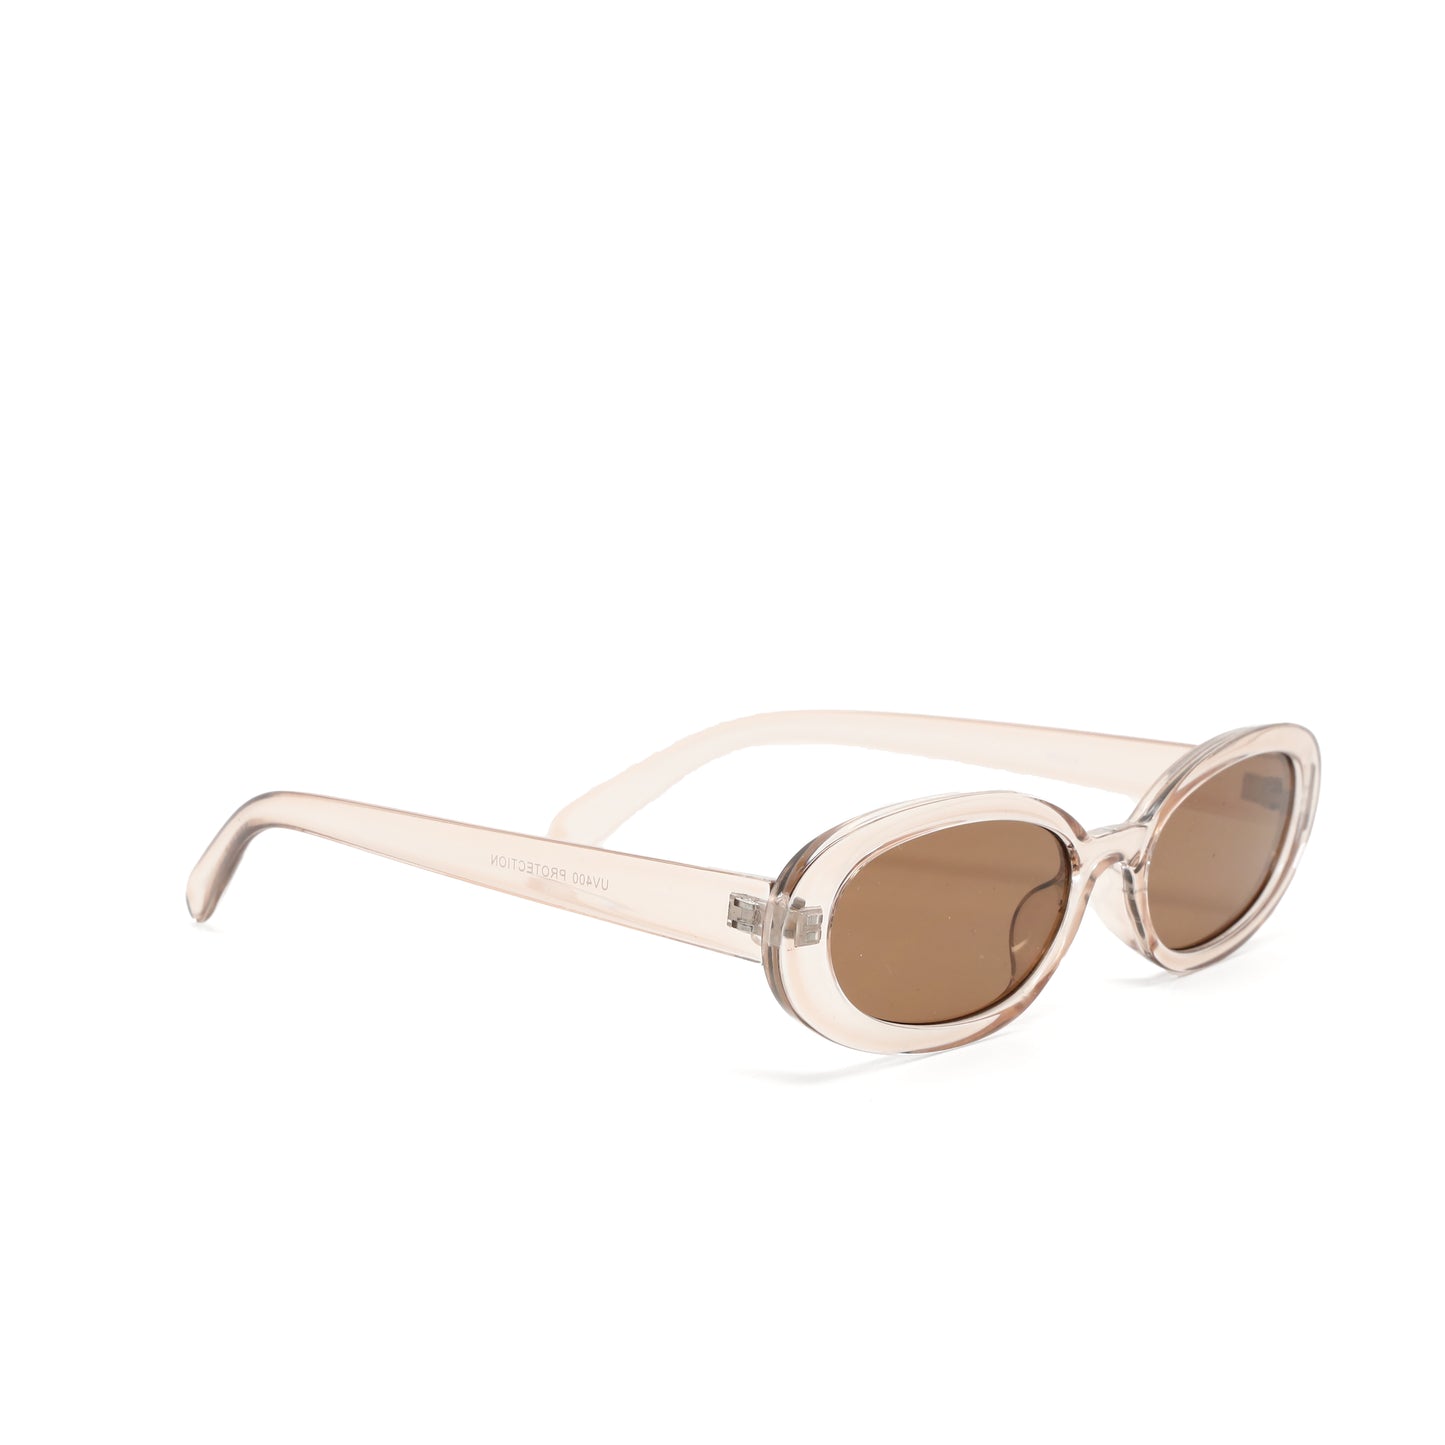 Retro Modern Standard Oval Frame Sunglasses - Transparent